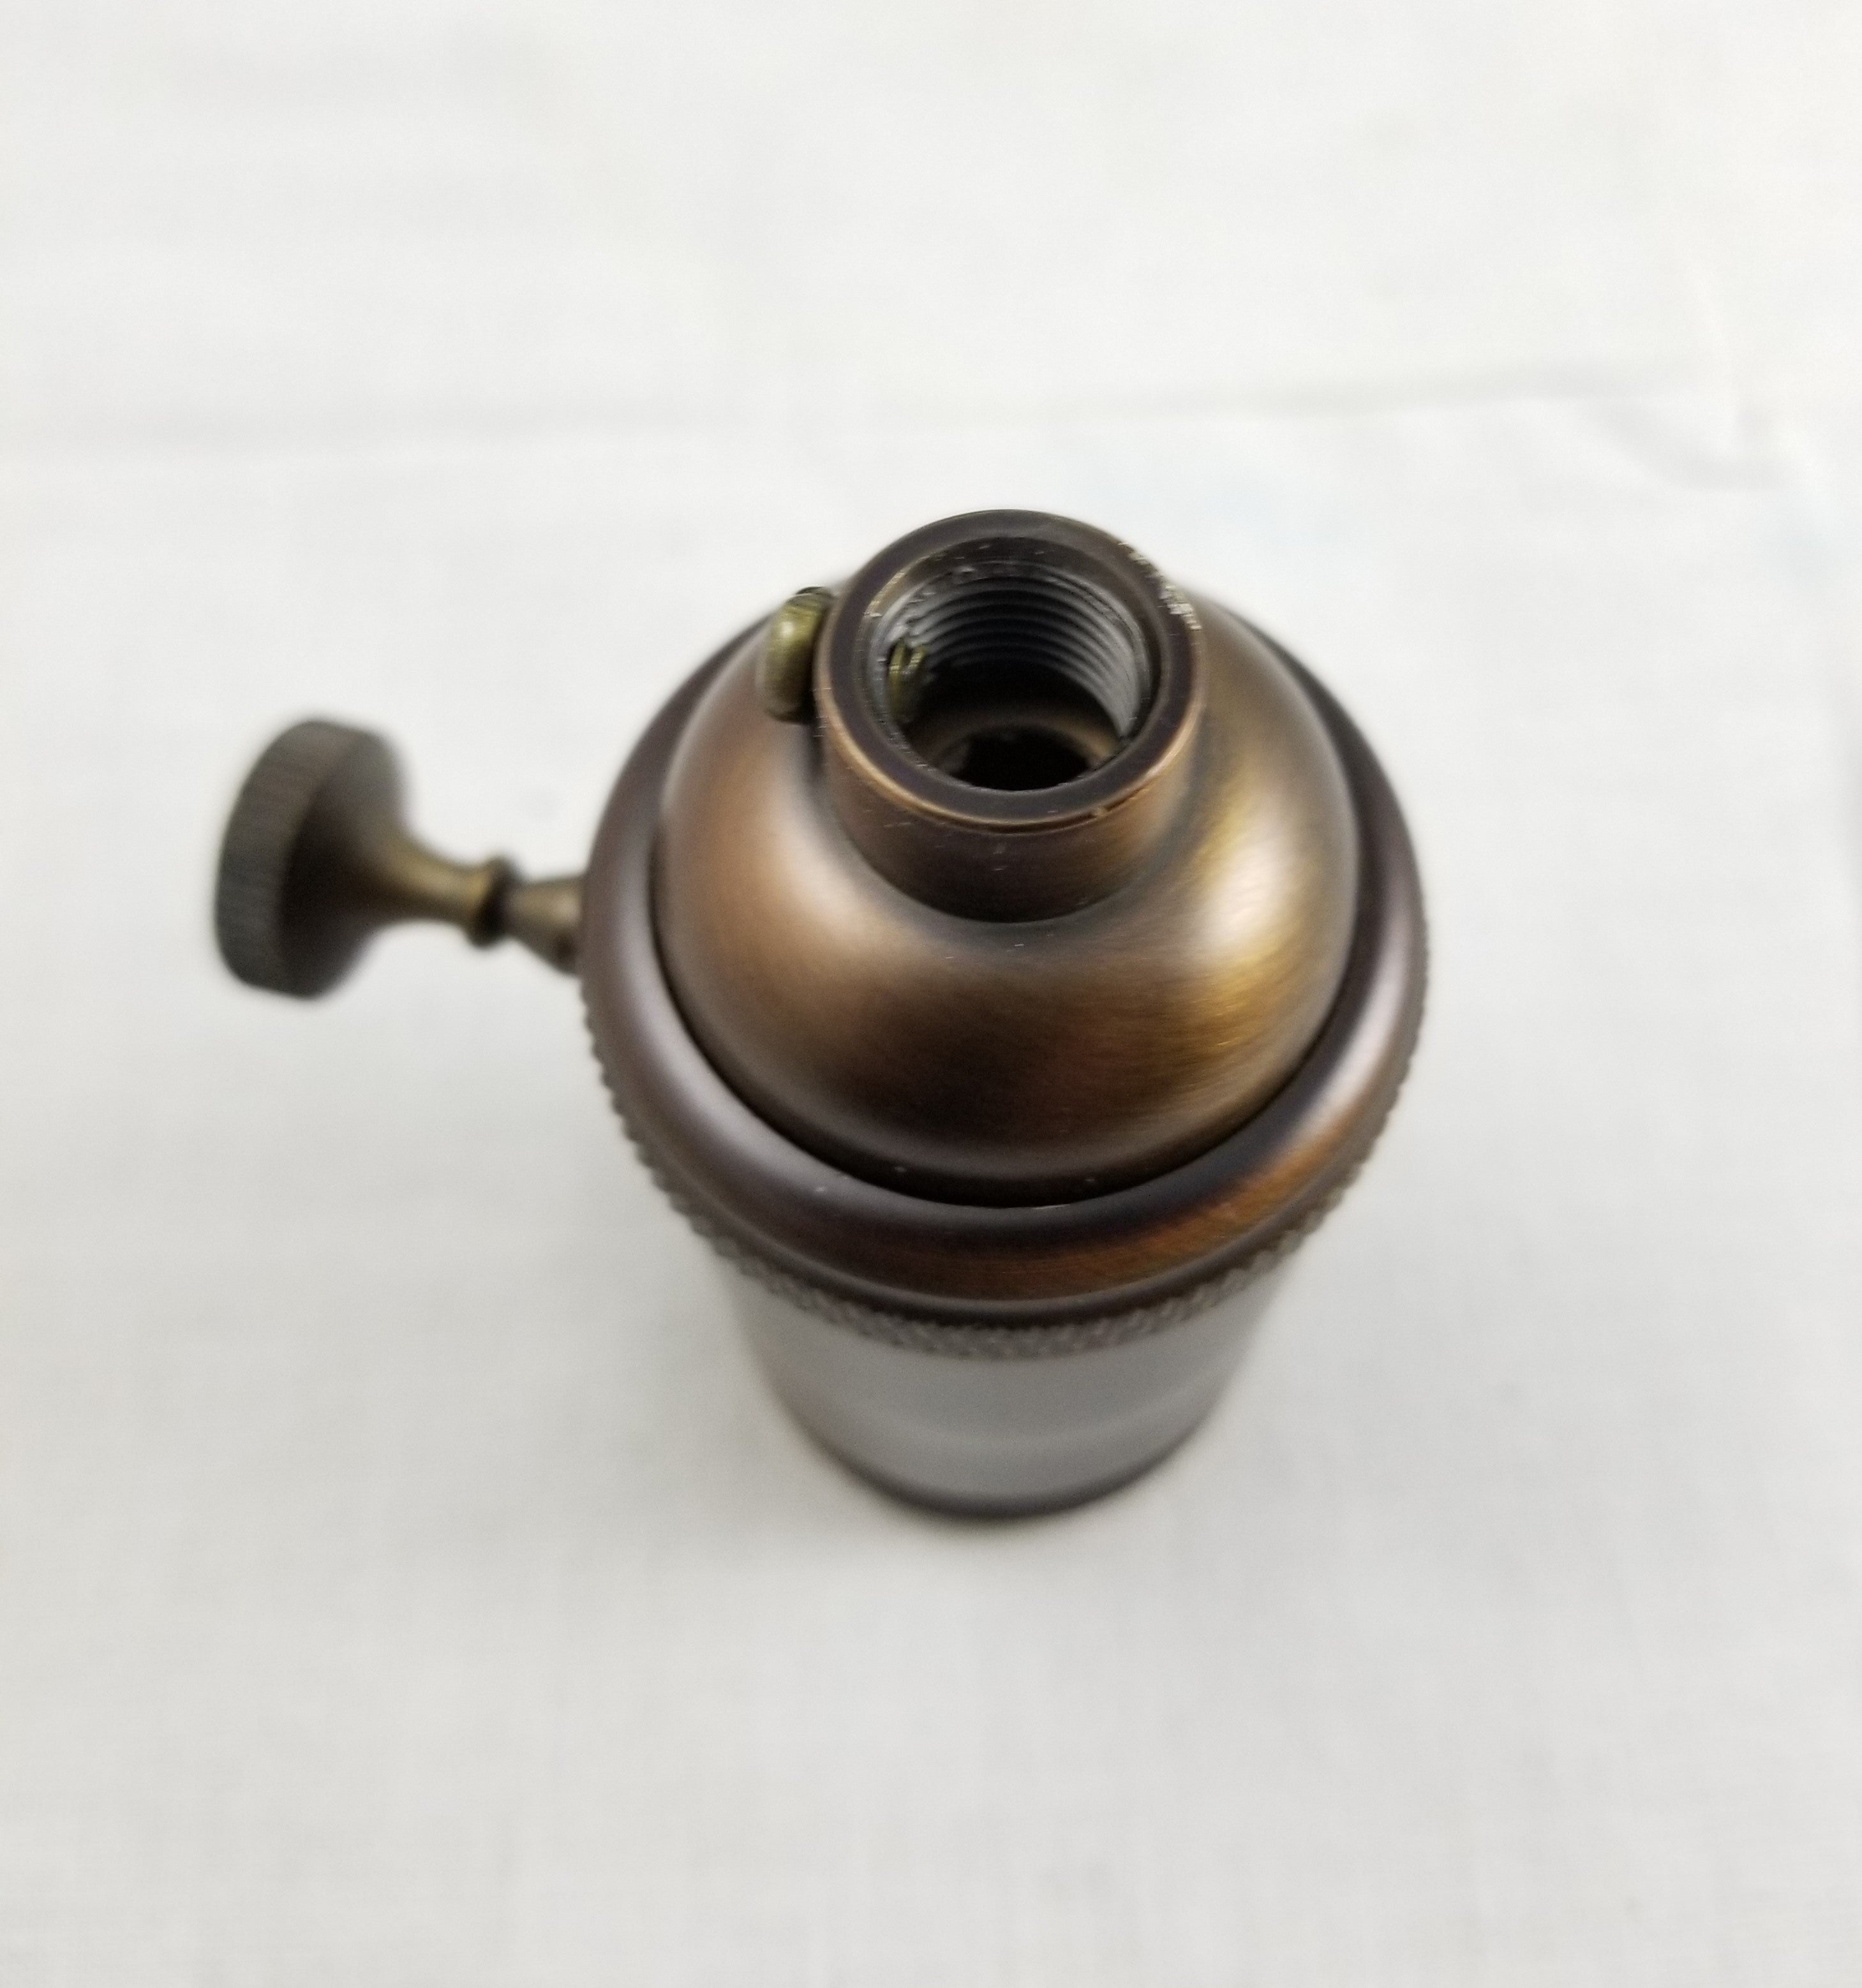 Uno Threaded Heavy Duty 3-Way Dark Antique Brass Turn Knob Socket w/ Set Screw